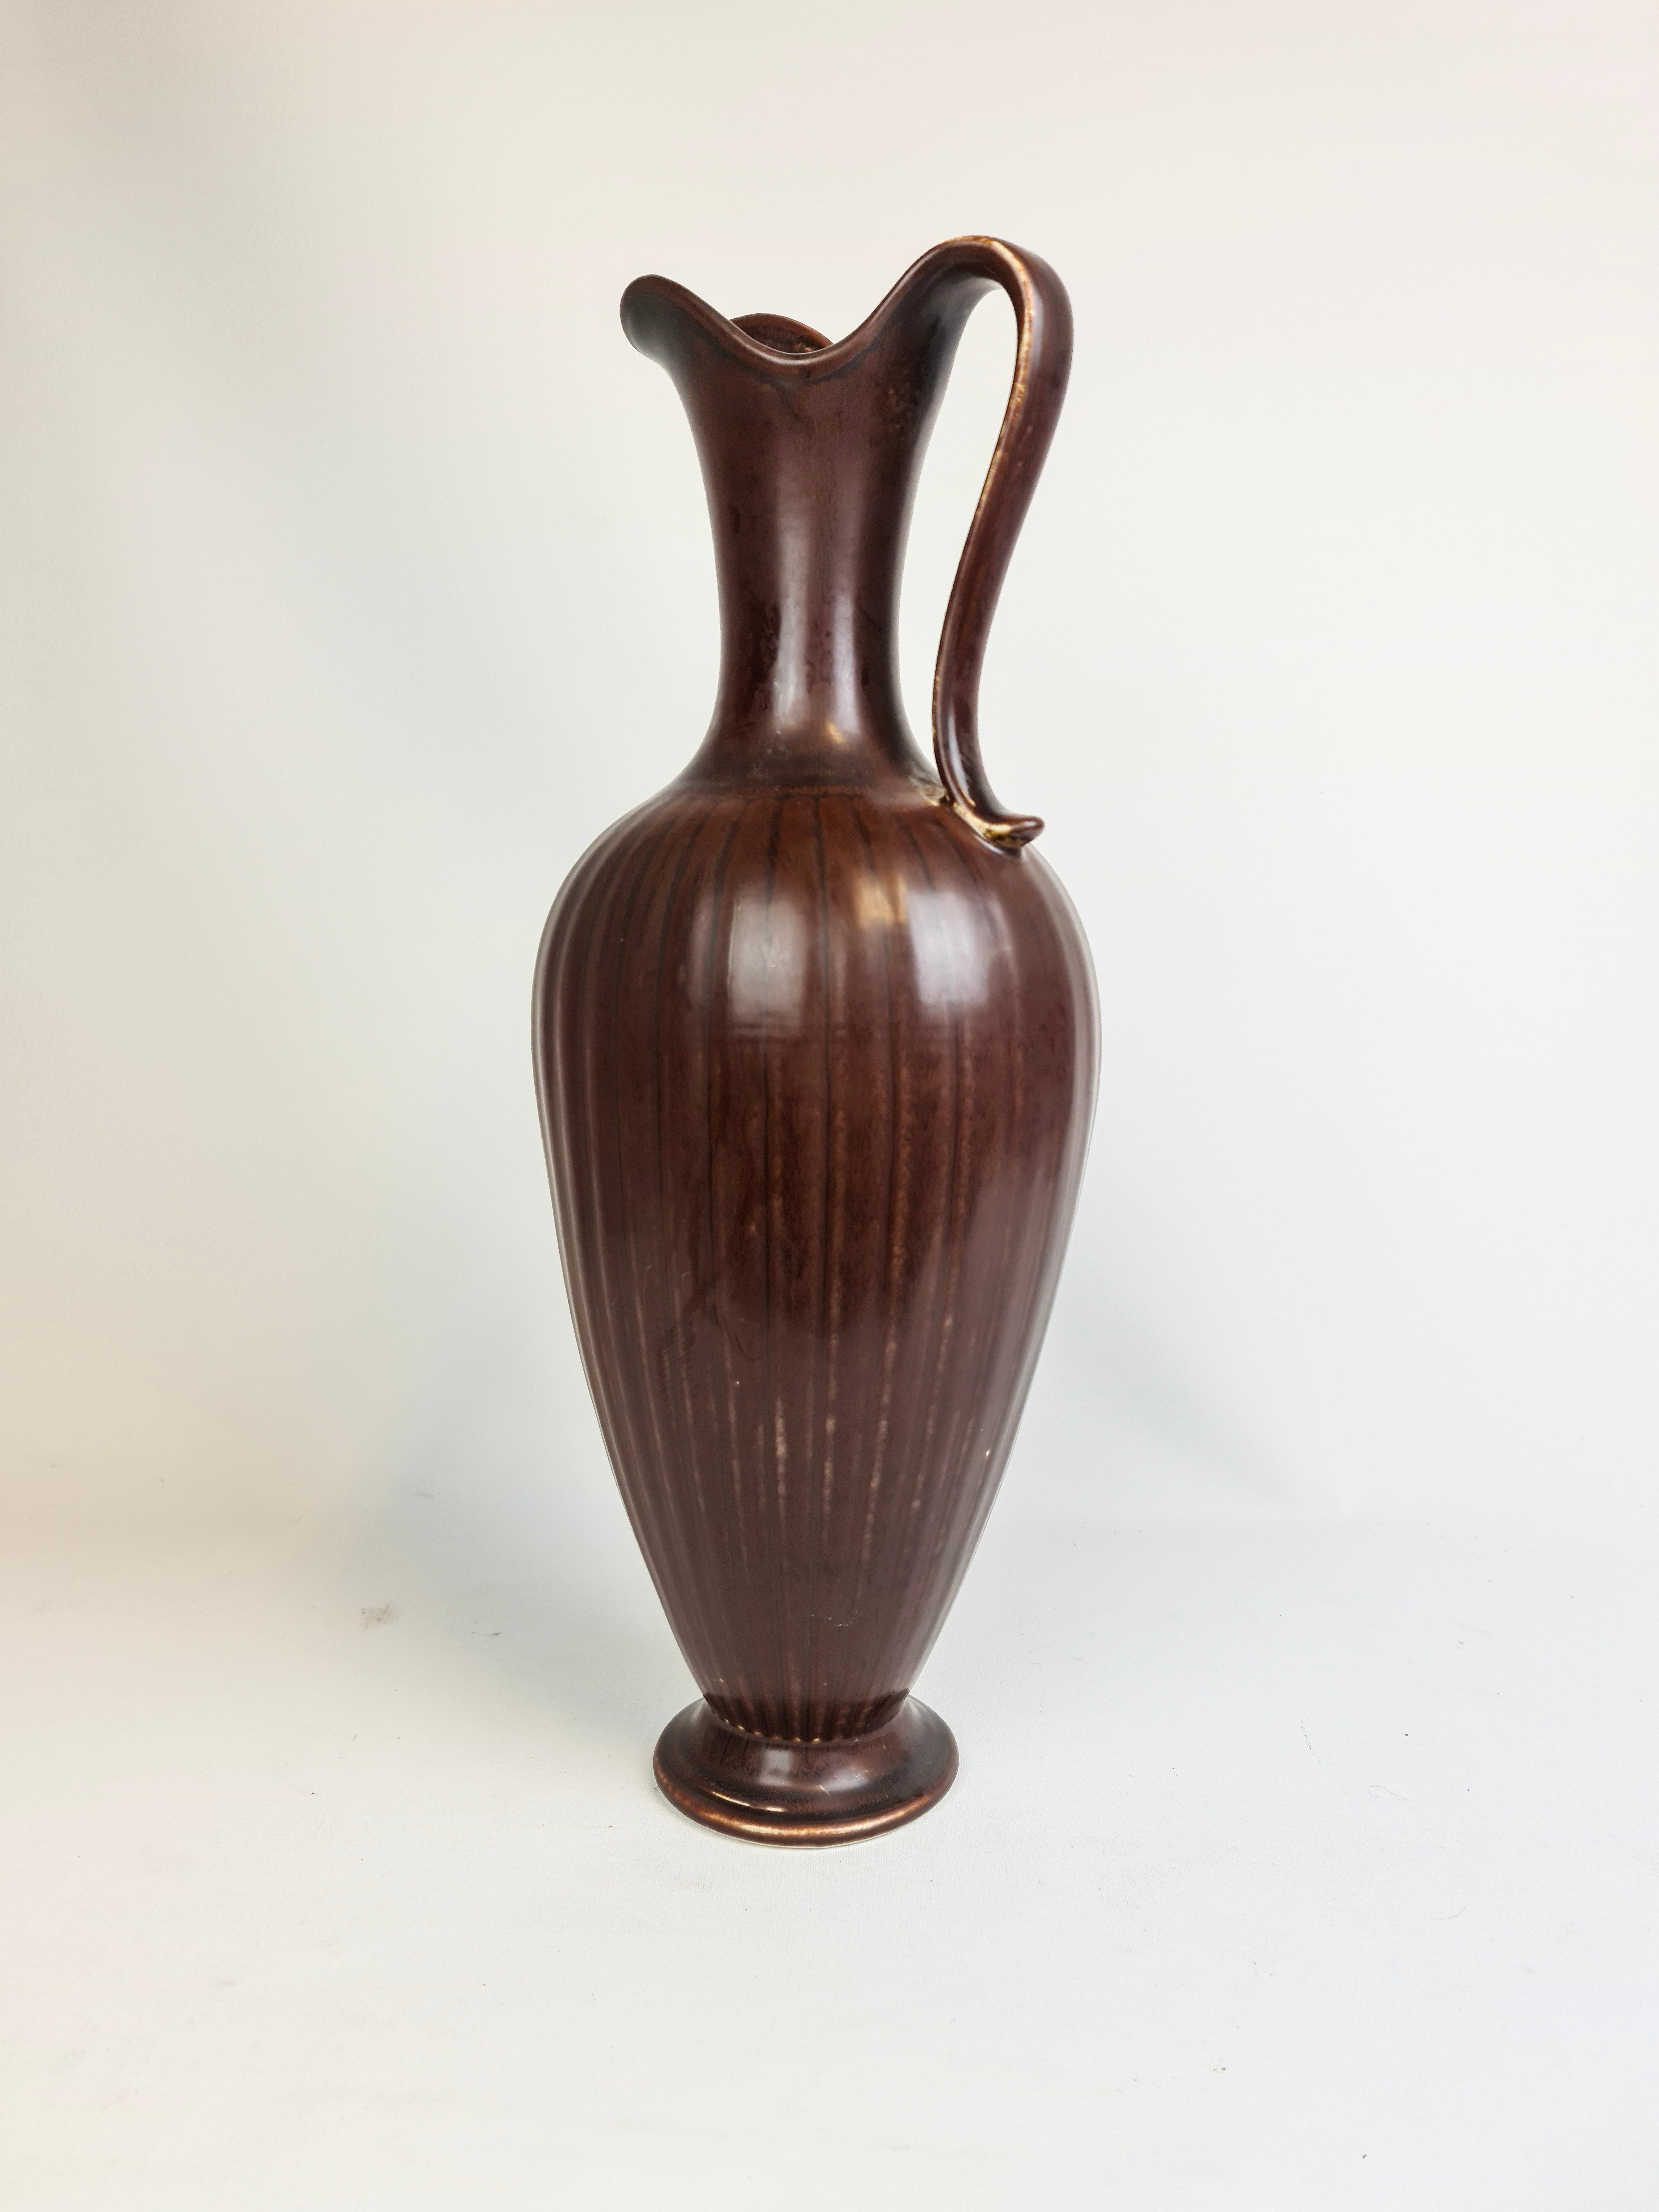 Suédois Grand vase en céramique moderne du milieu du siècle Rörstrand Gunnar Nylund, Suède en vente